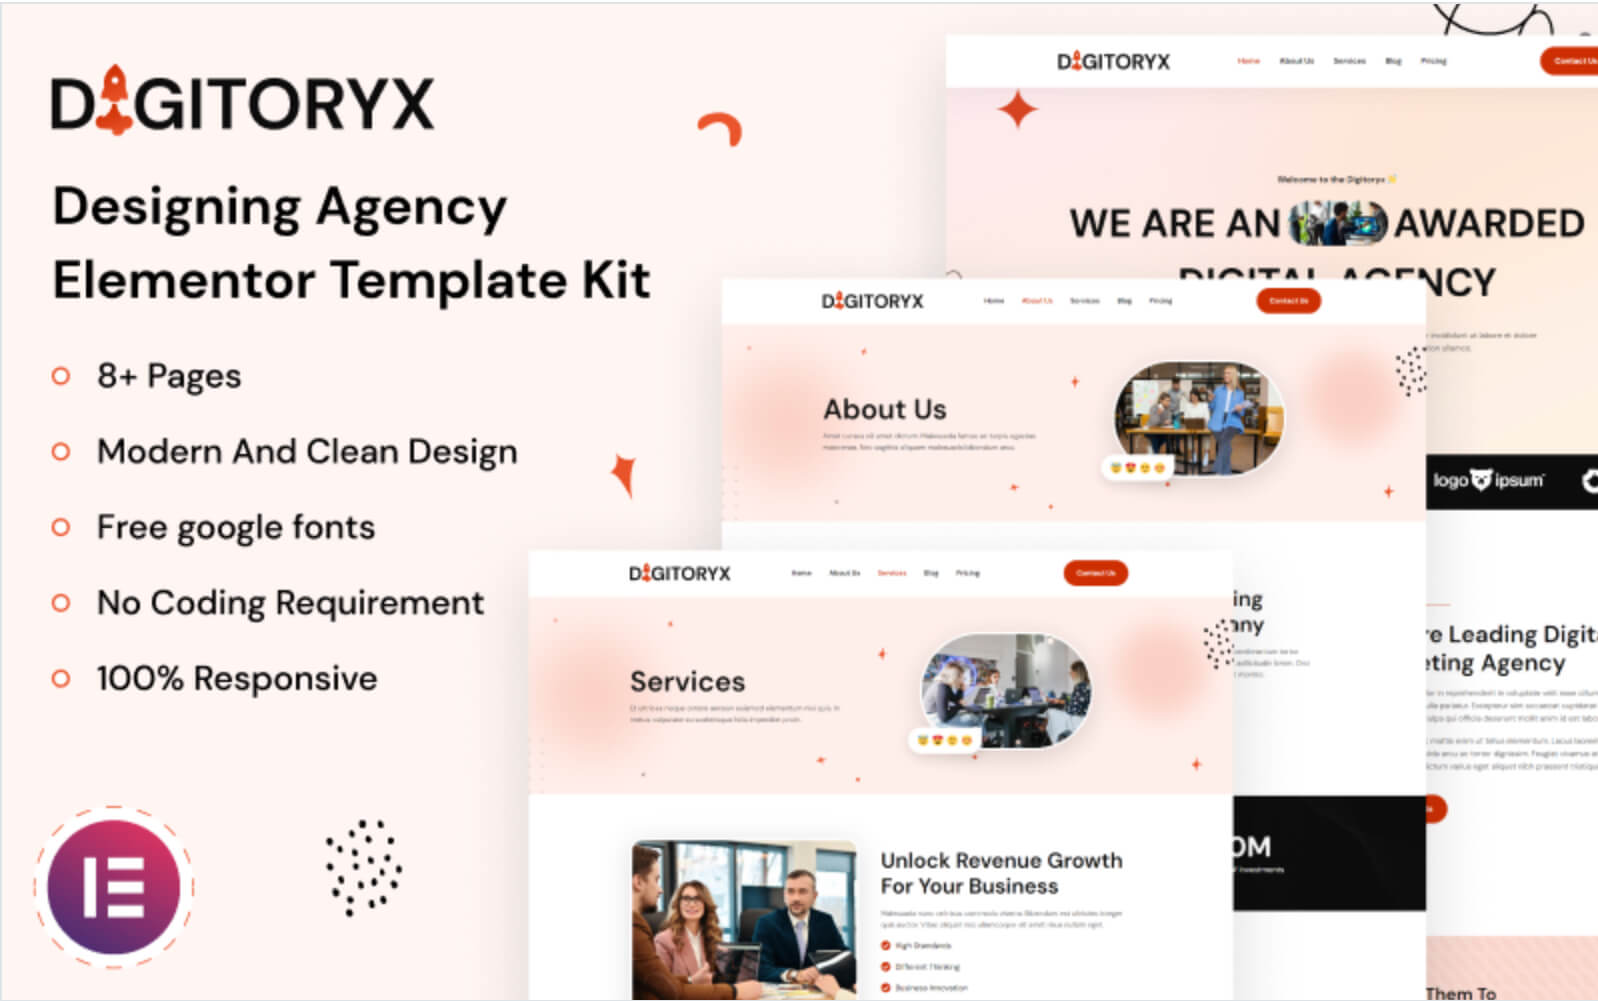 Digitoryx - Designing Agency Elementor Template Kit